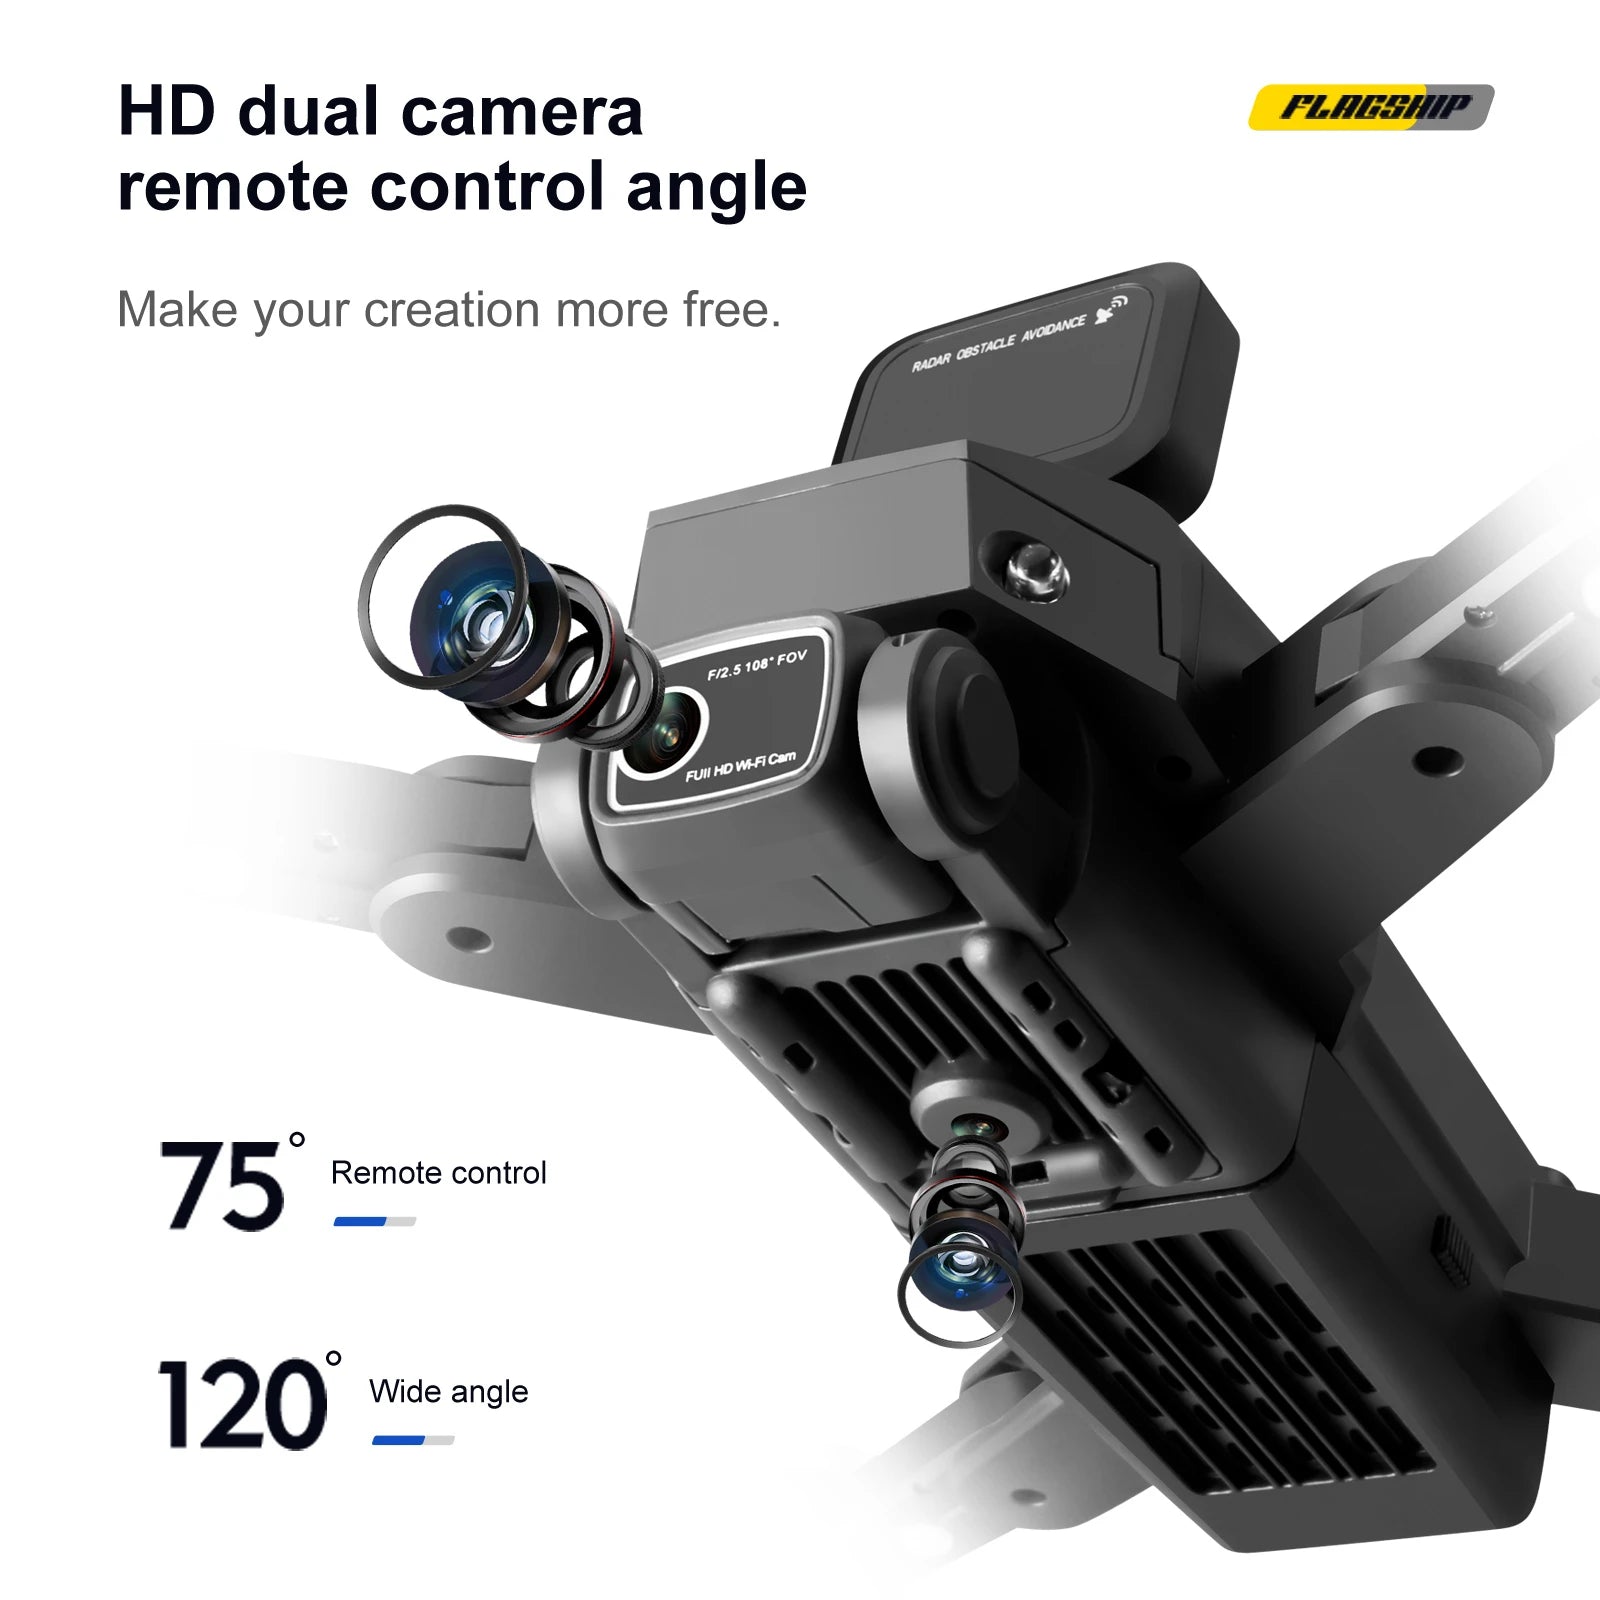 S109 GPS Drone, HD dual camera FLaEGHIP remote control angle Make your creation more free. 75 Remote